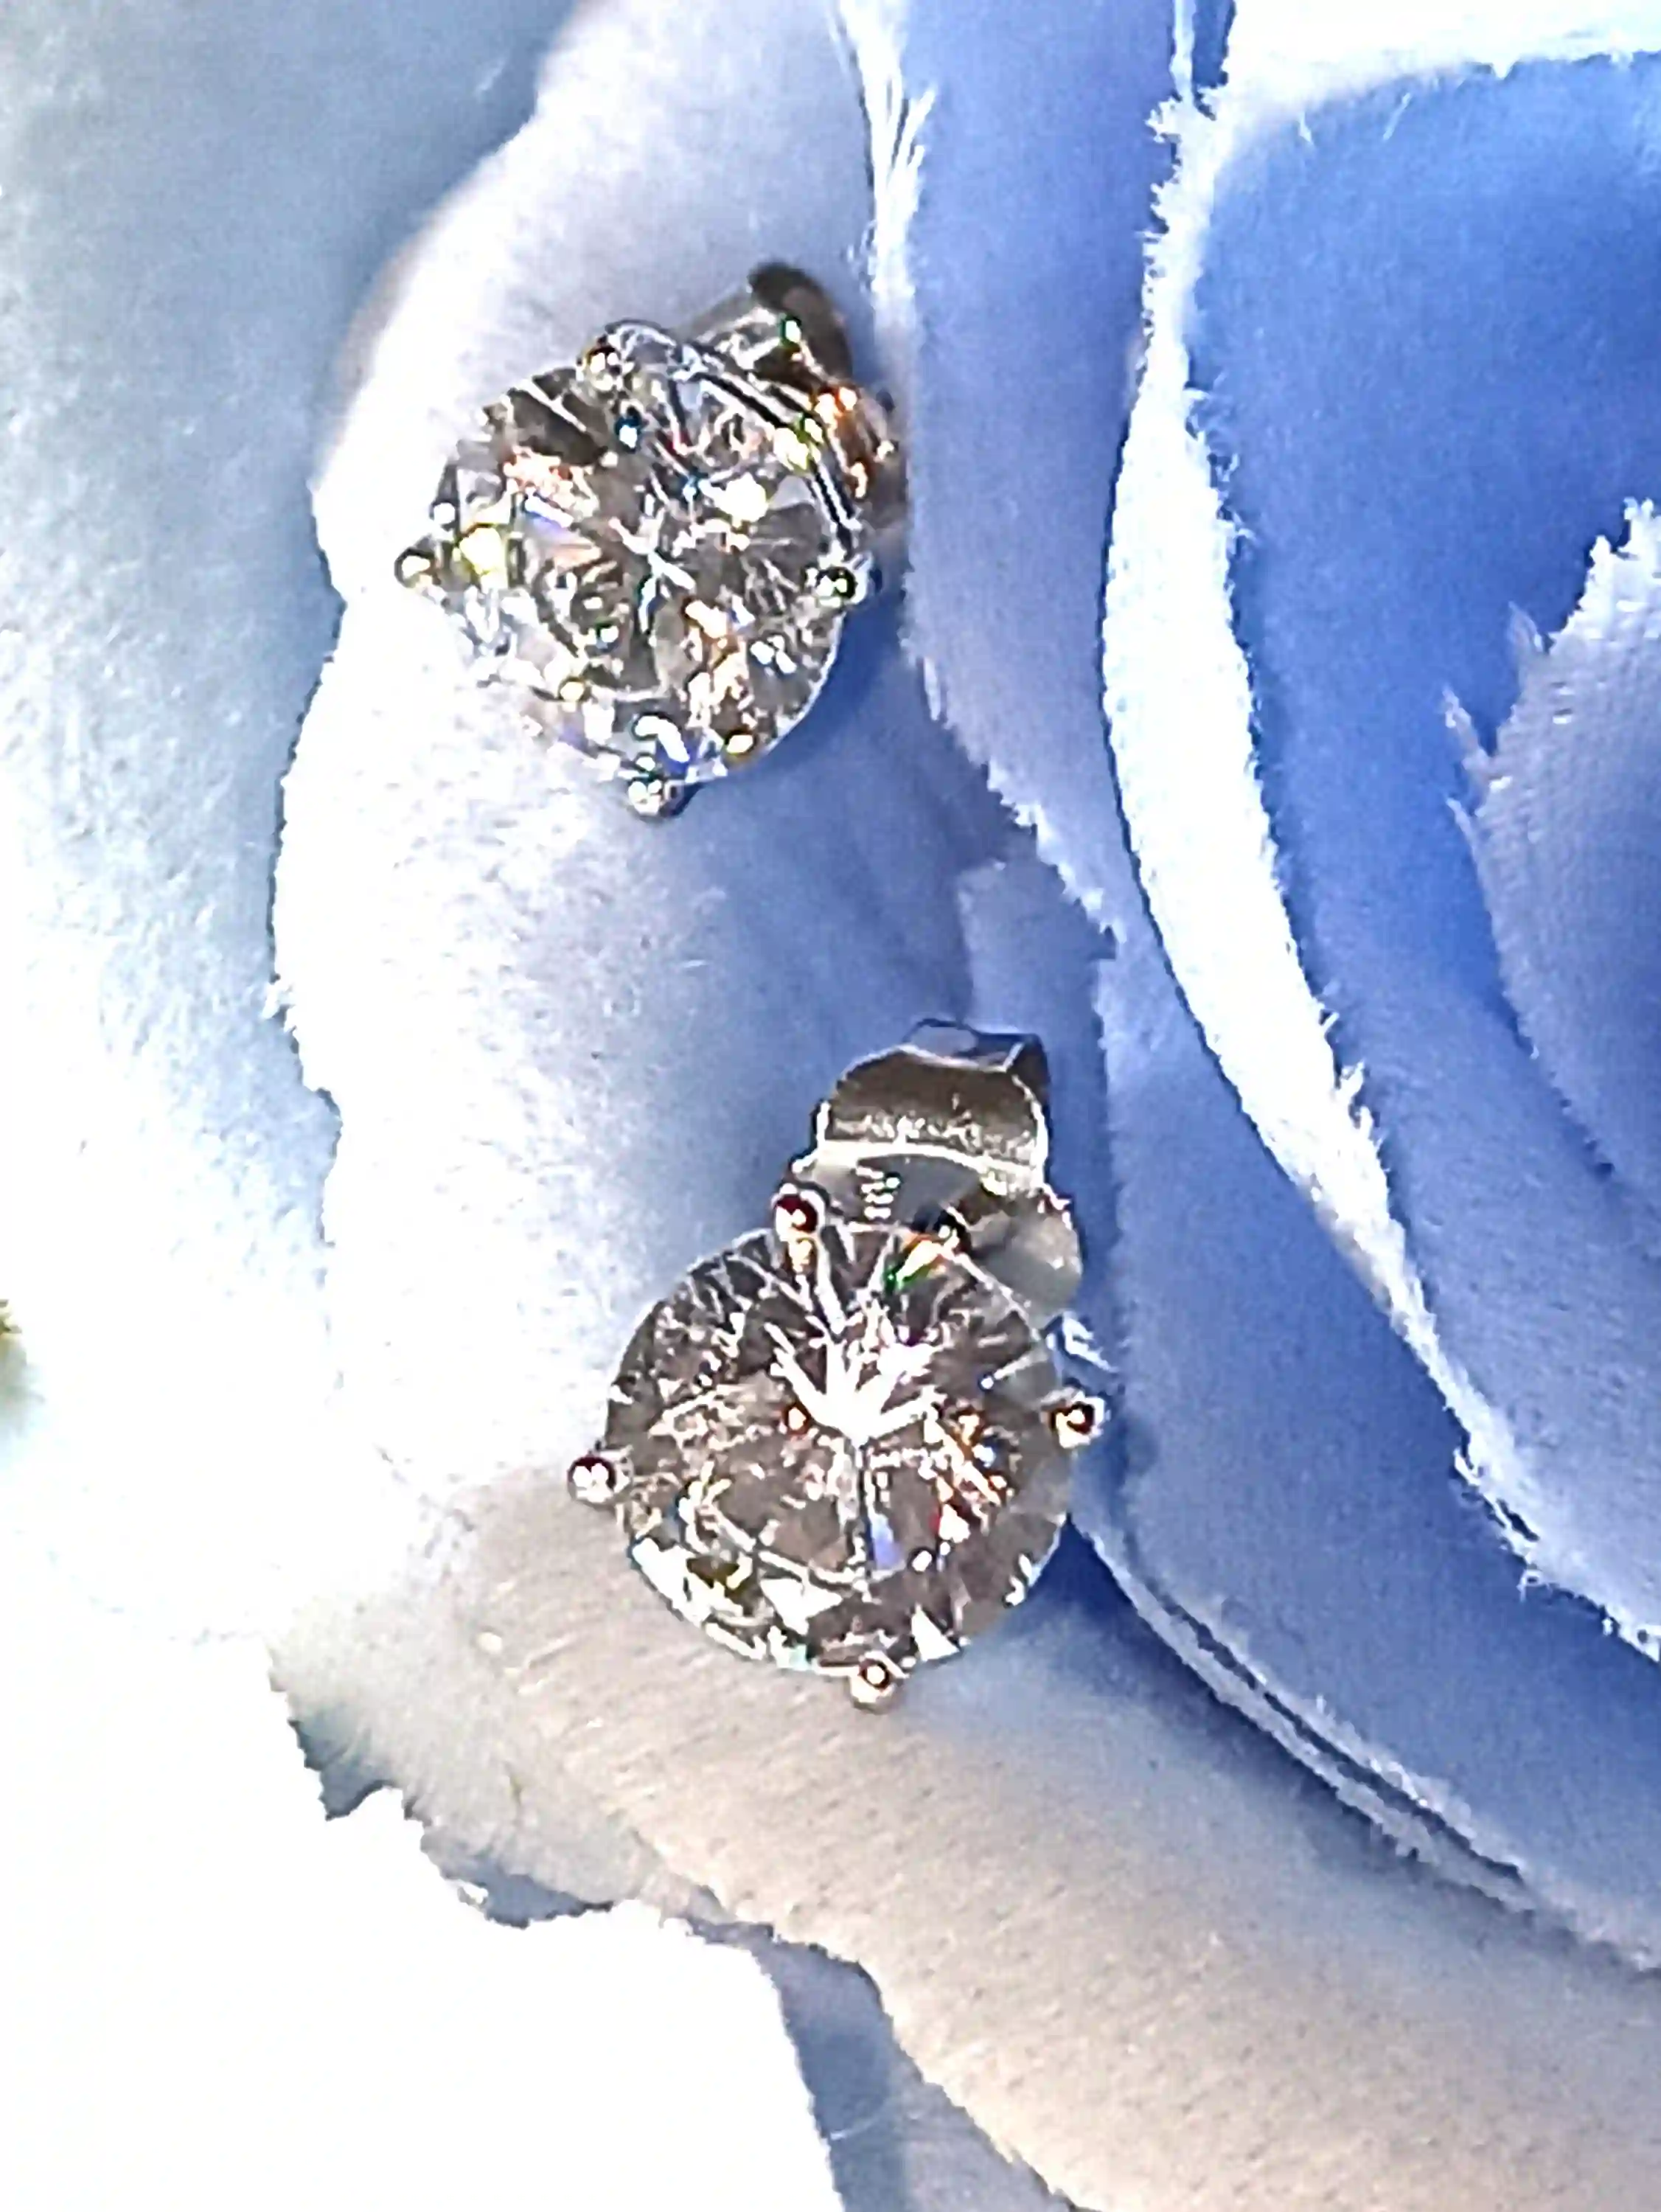 2ct Diamond Earrings Solitaire SOLID 18K GOLD Earrings White Gold Anniversary Gift Diamond Studs Solitaire Earrings Diamond Jewelry 6.5mm 